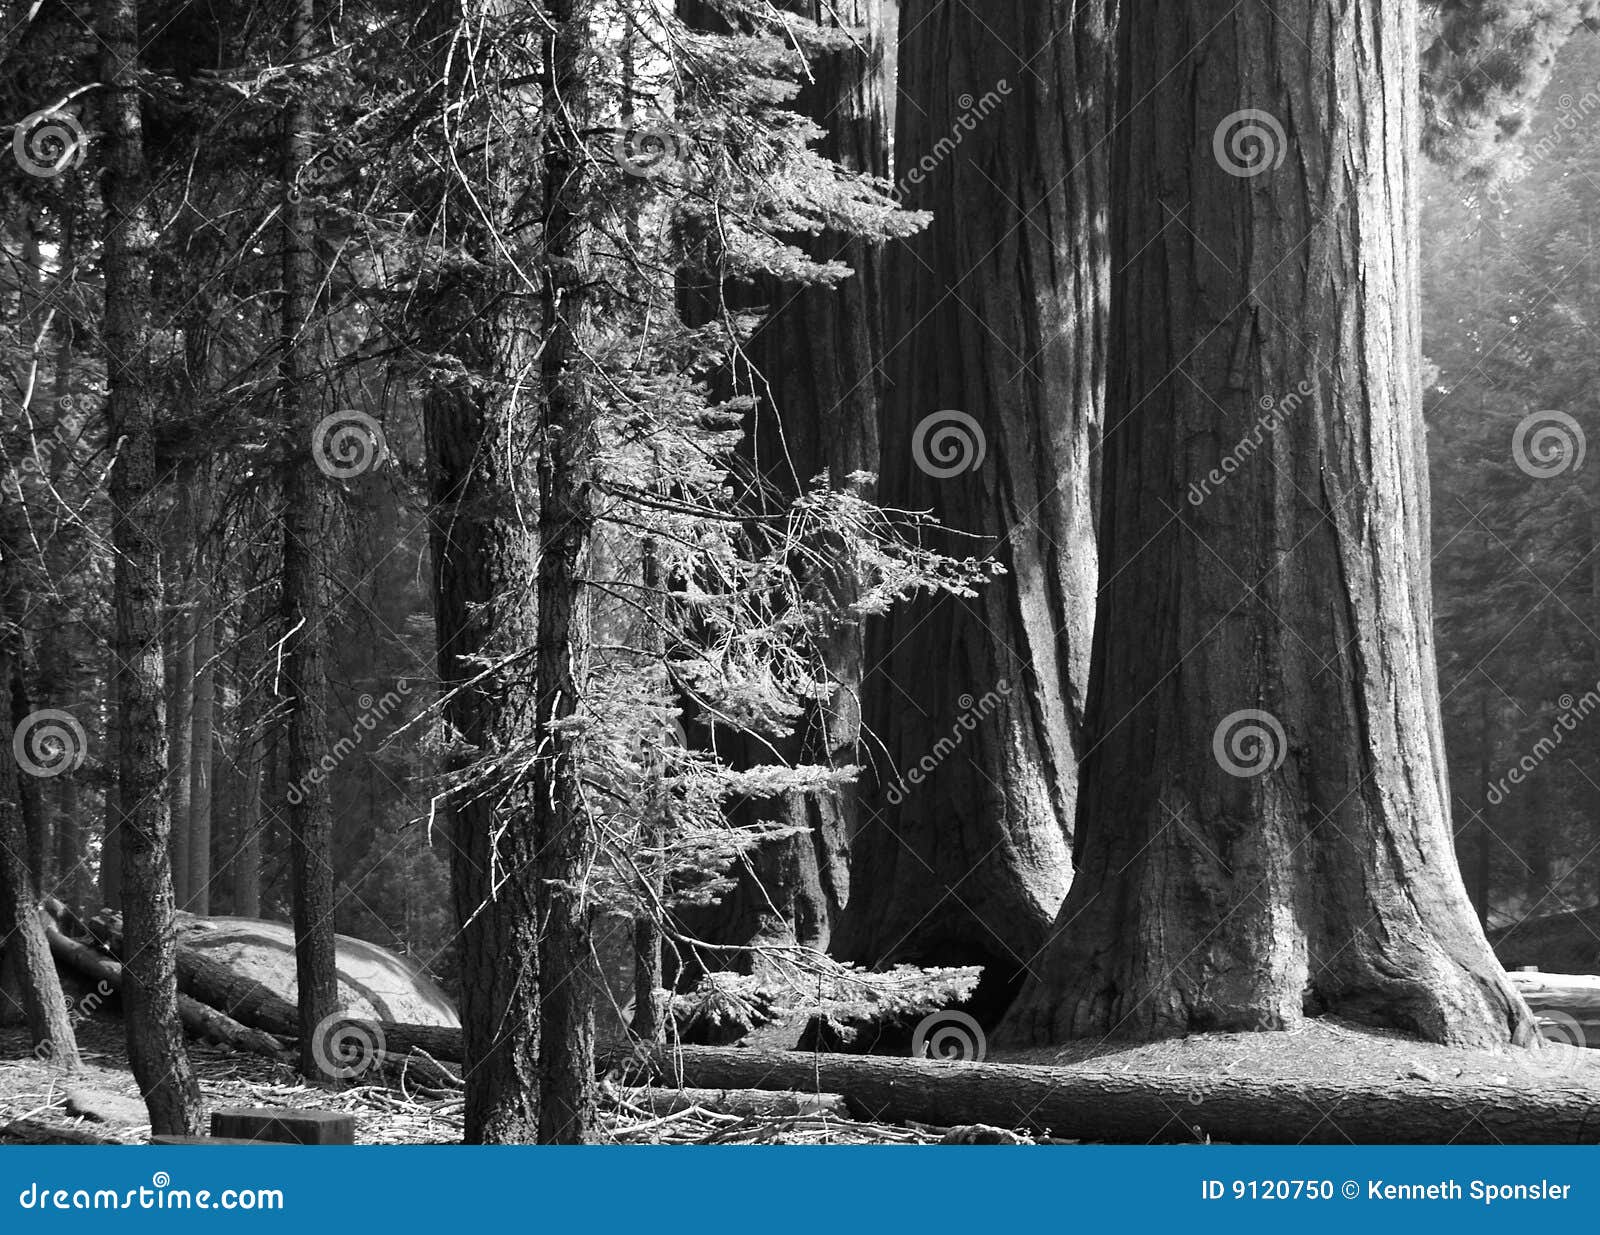 three stalwart sequoias